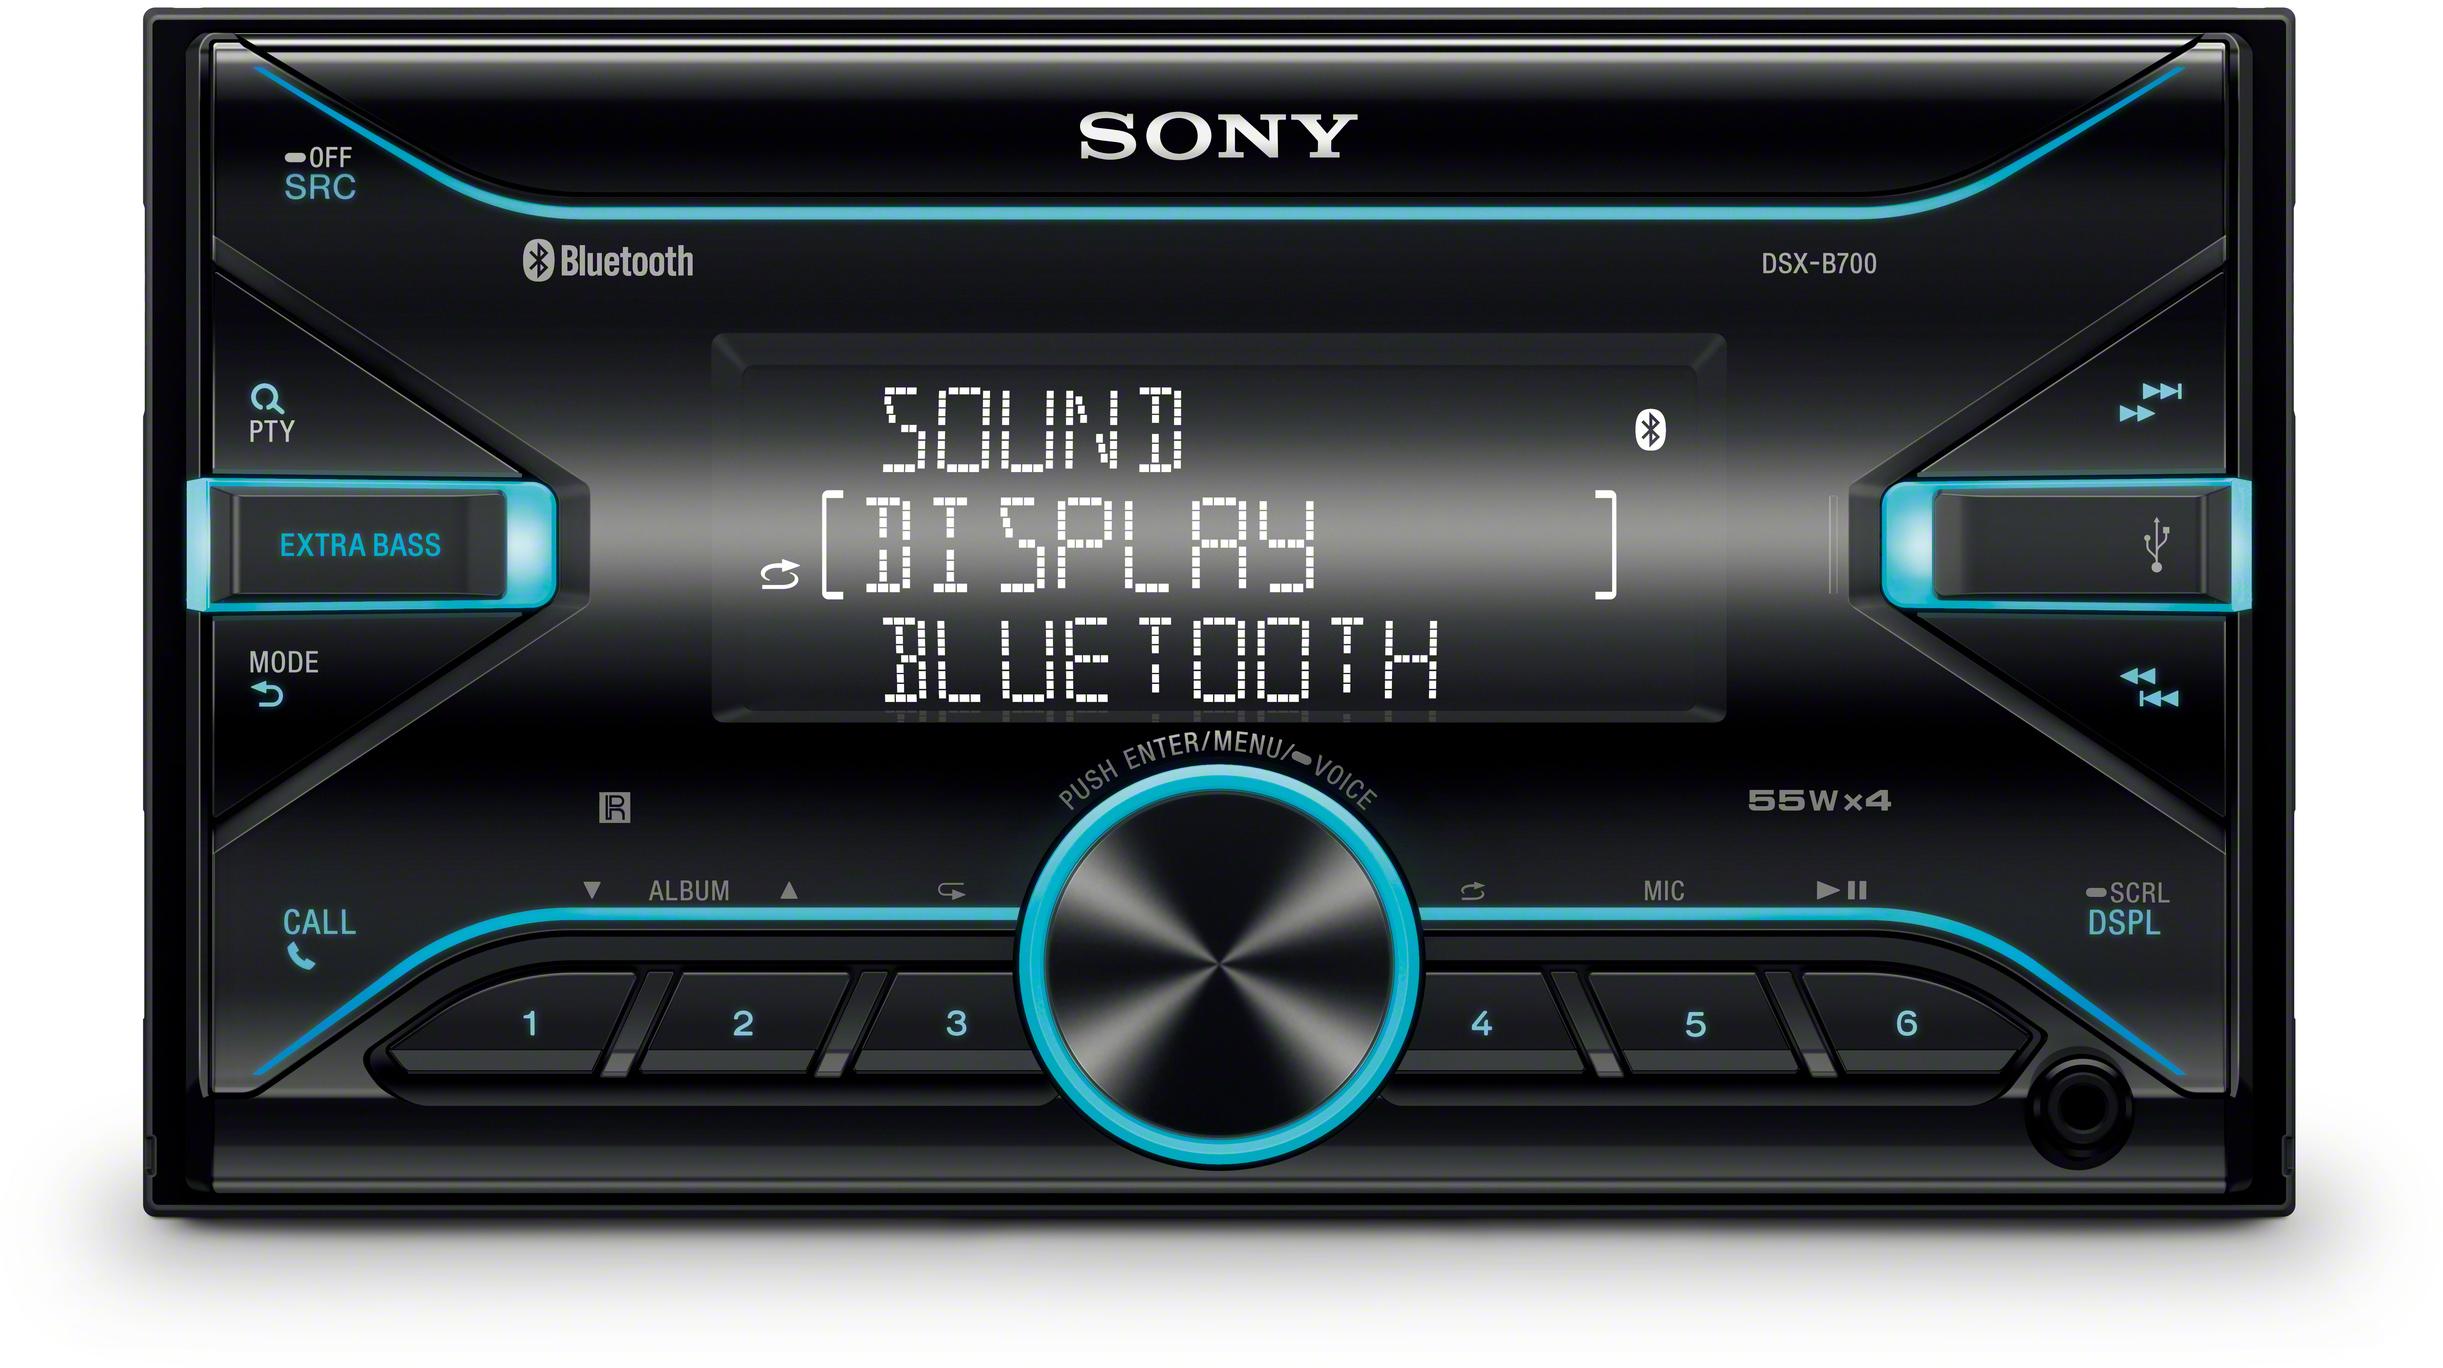 Sony Dsx-B700 Car Stereo